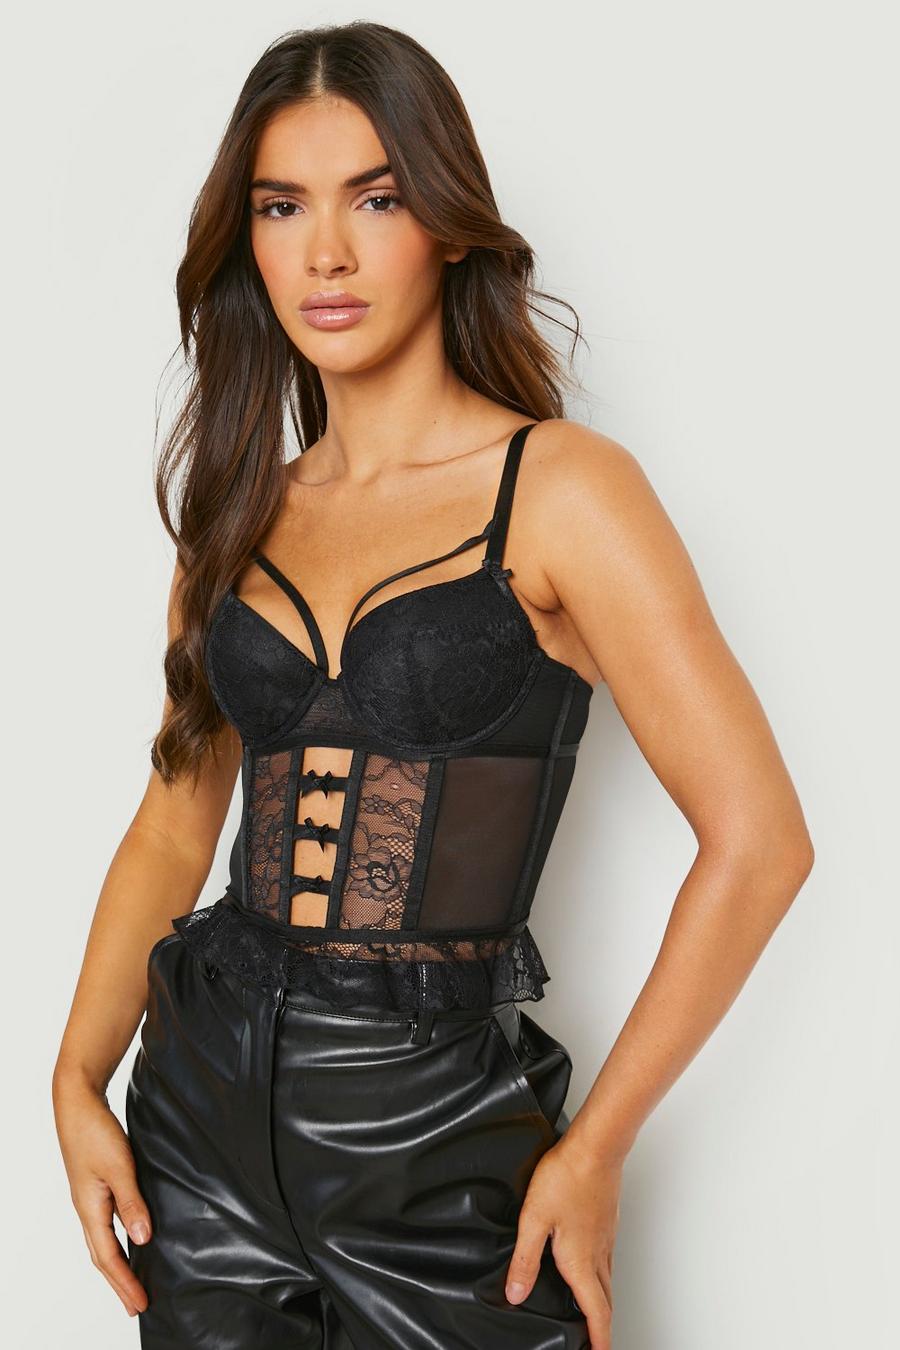 https://media.boohoo.com/i/boohoo/lzz00472_black_xl/female-black-premium-lace-longline-corset-detail-bra/?w=900&qlt=default&fmt.jp2.qlt=70&fmt=auto&sm=fit